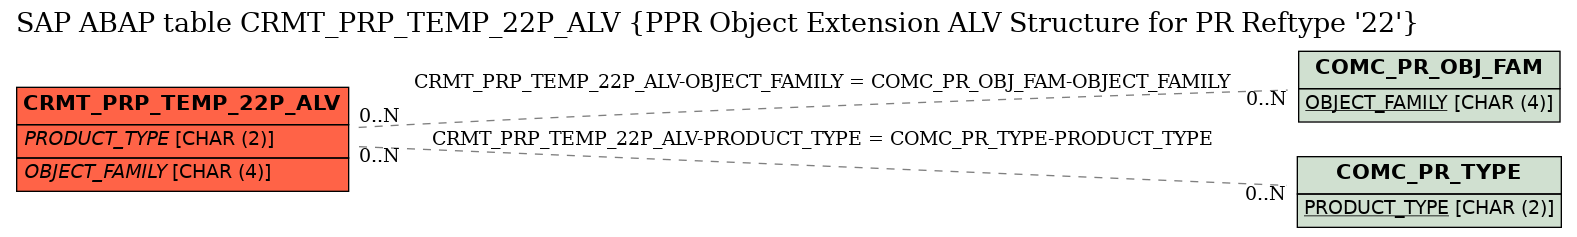 E-R Diagram for table CRMT_PRP_TEMP_22P_ALV (PPR Object Extension ALV Structure for PR Reftype '22')